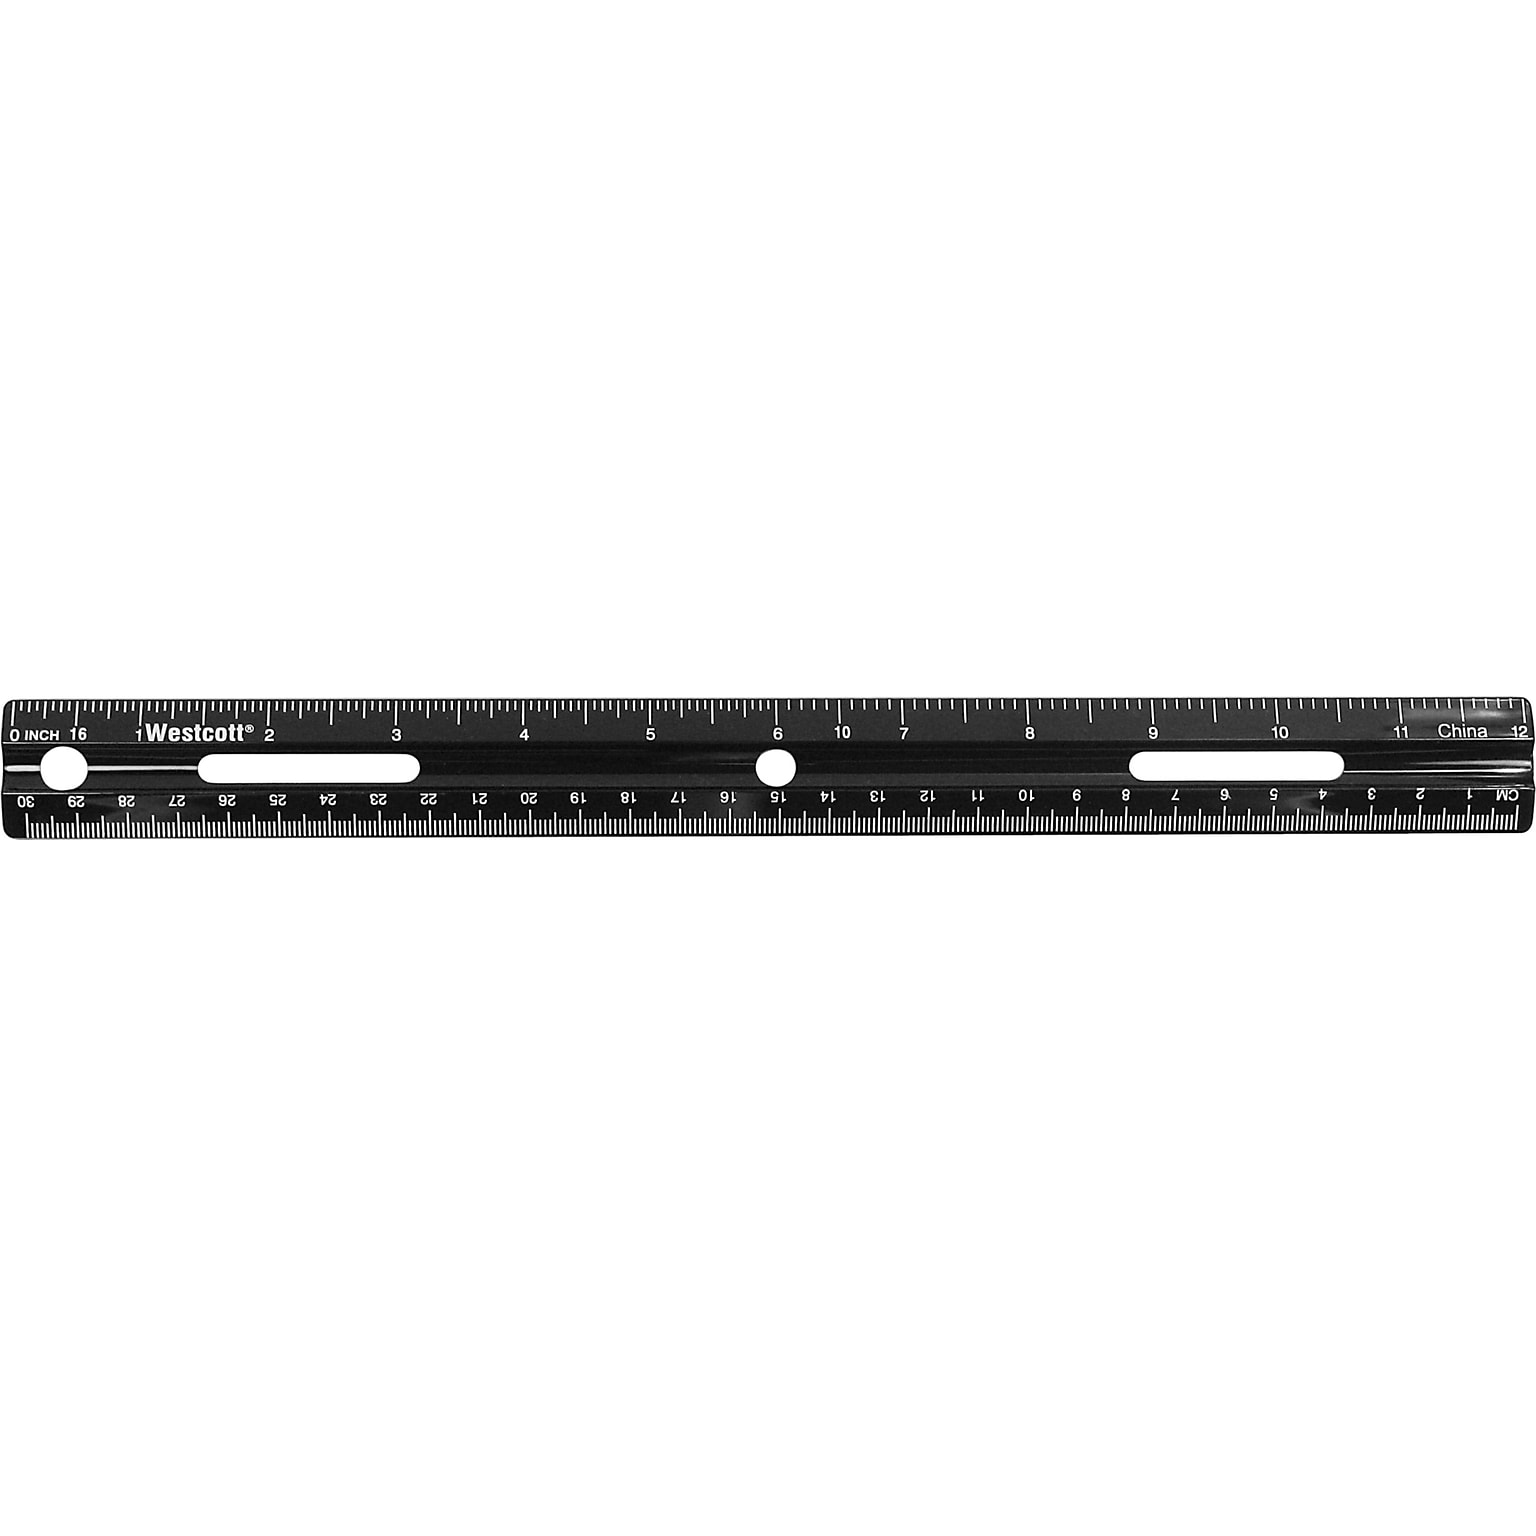 Westcott KleenEarth Recycled 12 Plastic Standard Ruler, Black (41015)